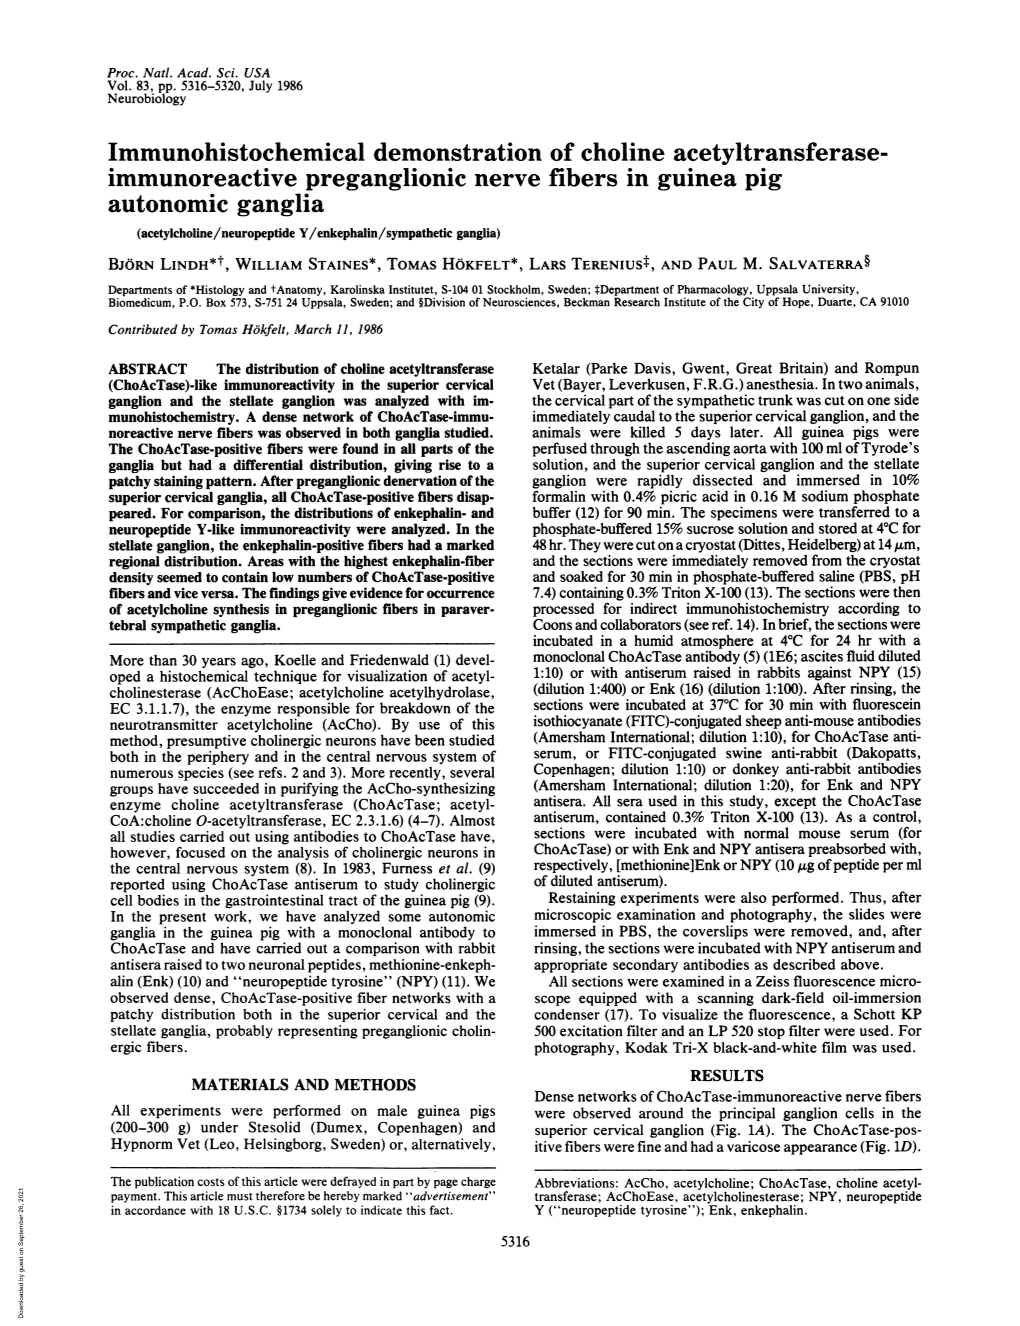 Immunoreactive Preganglionic Nerve Fibers in Guinea Pig Autonomic